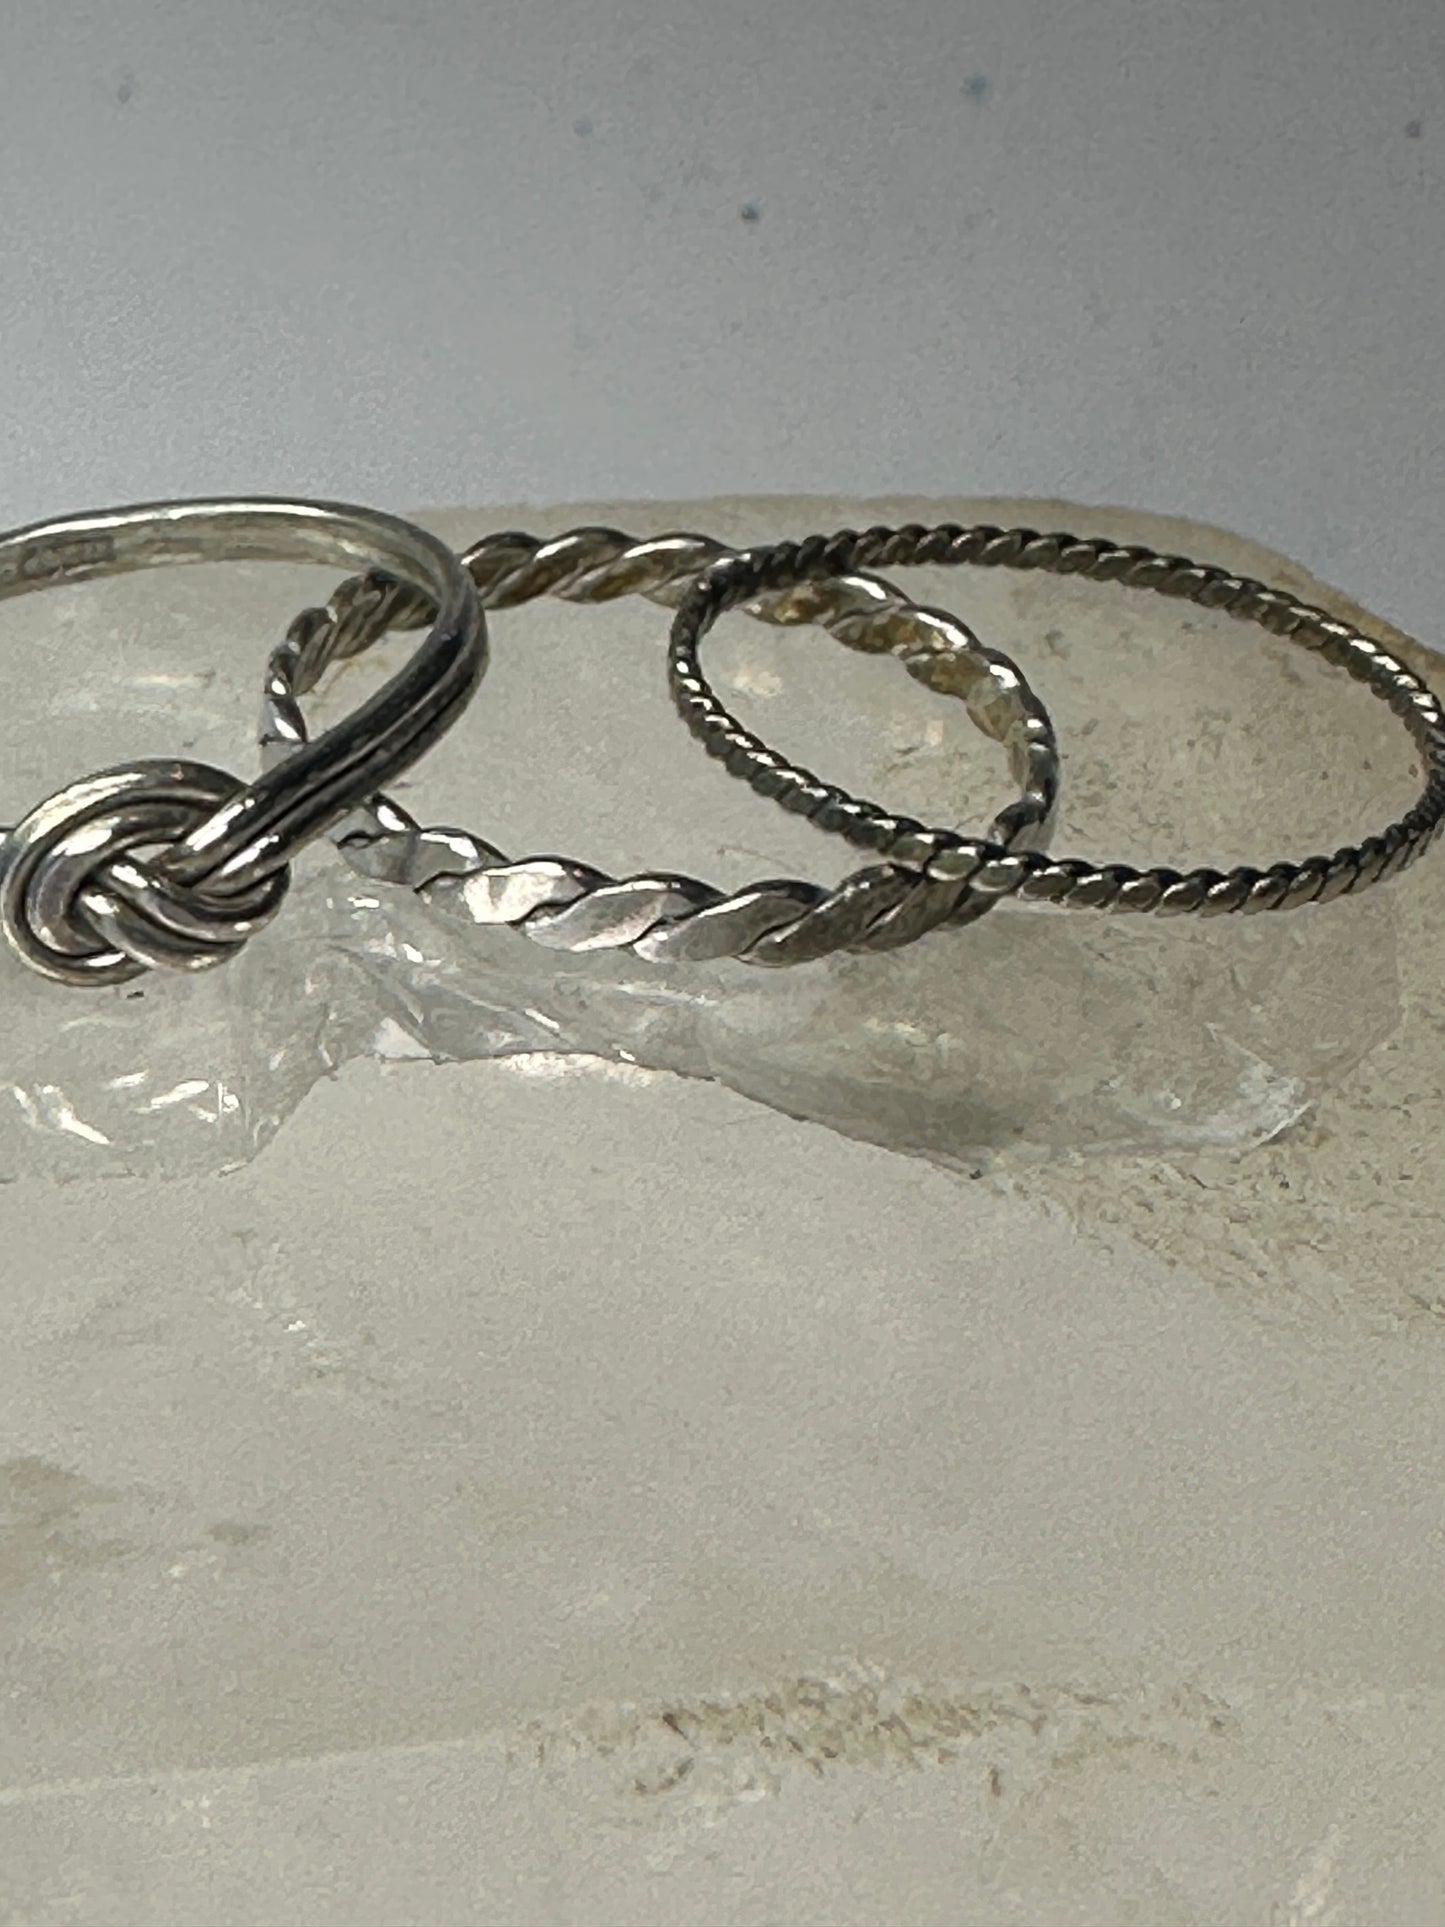 5 Slender ring stacker band size 7.50 sterling  silver women girls rings bands